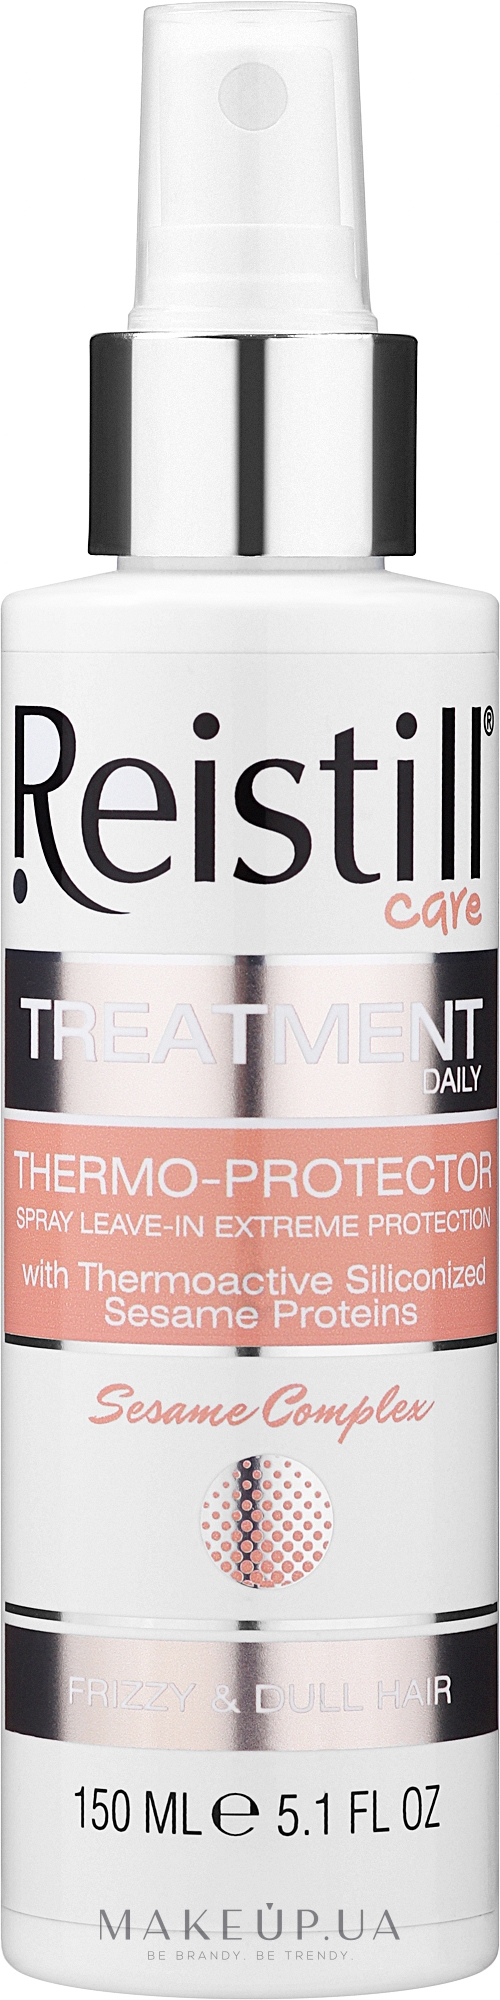 Термозащитный спрей для непослушных и тусклых волос - Reistill Treatment Daily Thermo-protector Spray Leave-in Extreme Protection — фото 150ml